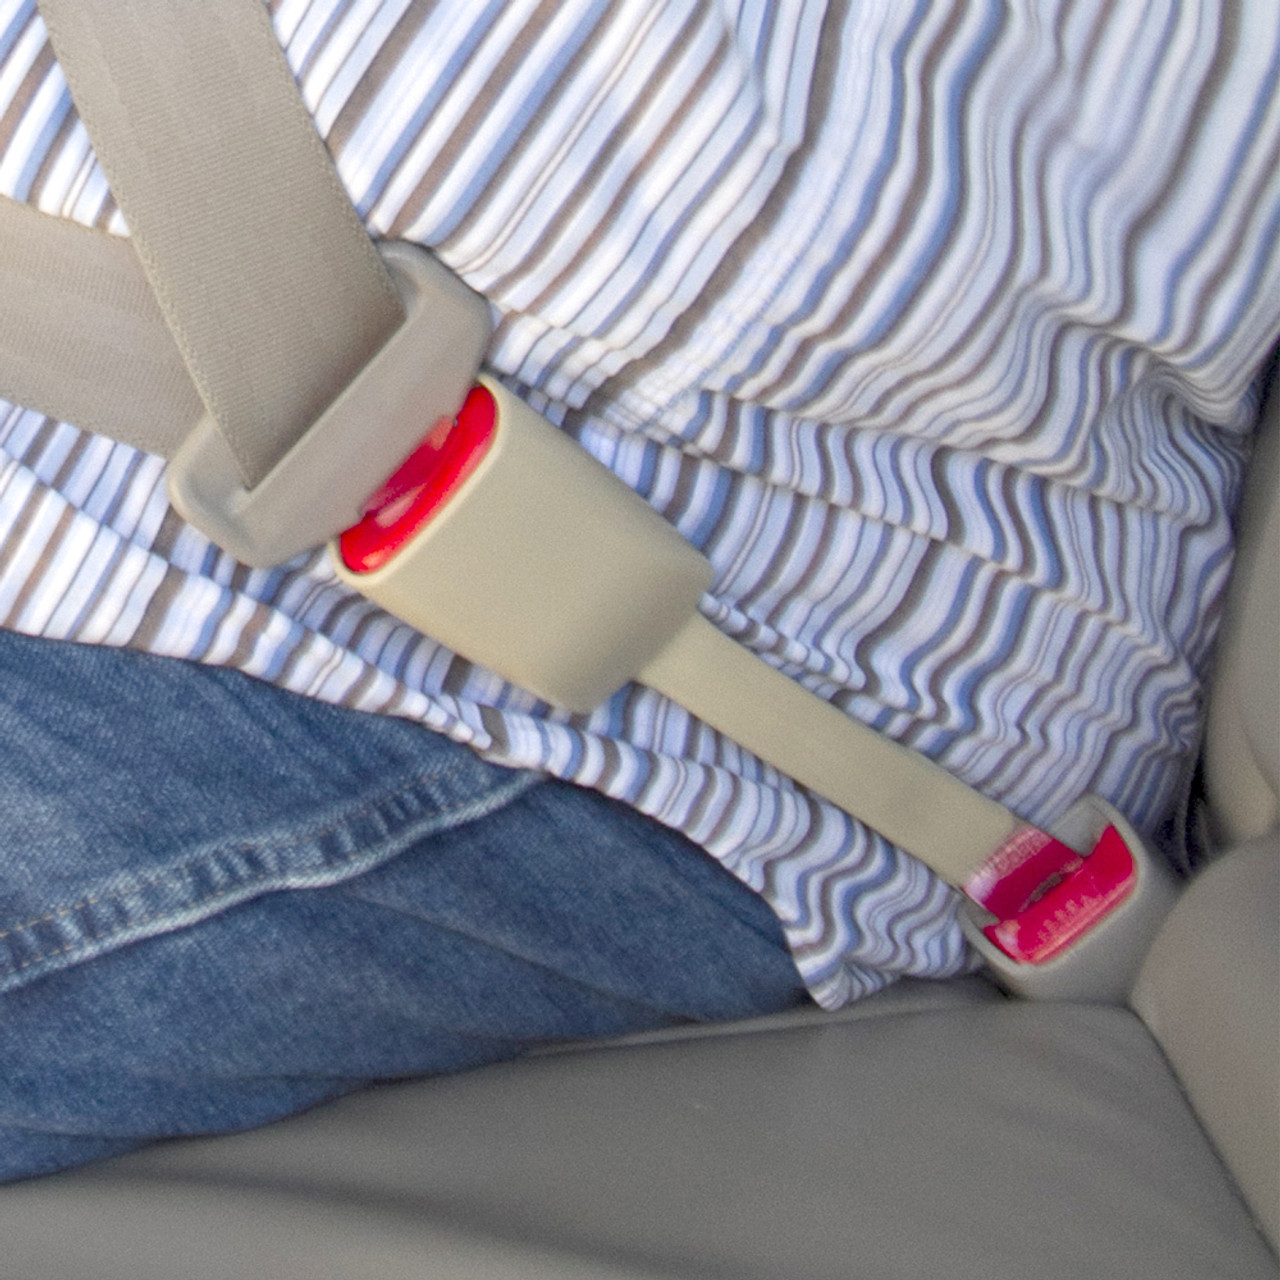 Car Seat Belt Retainer Car Seat Belt Extender Safety Seatbelt